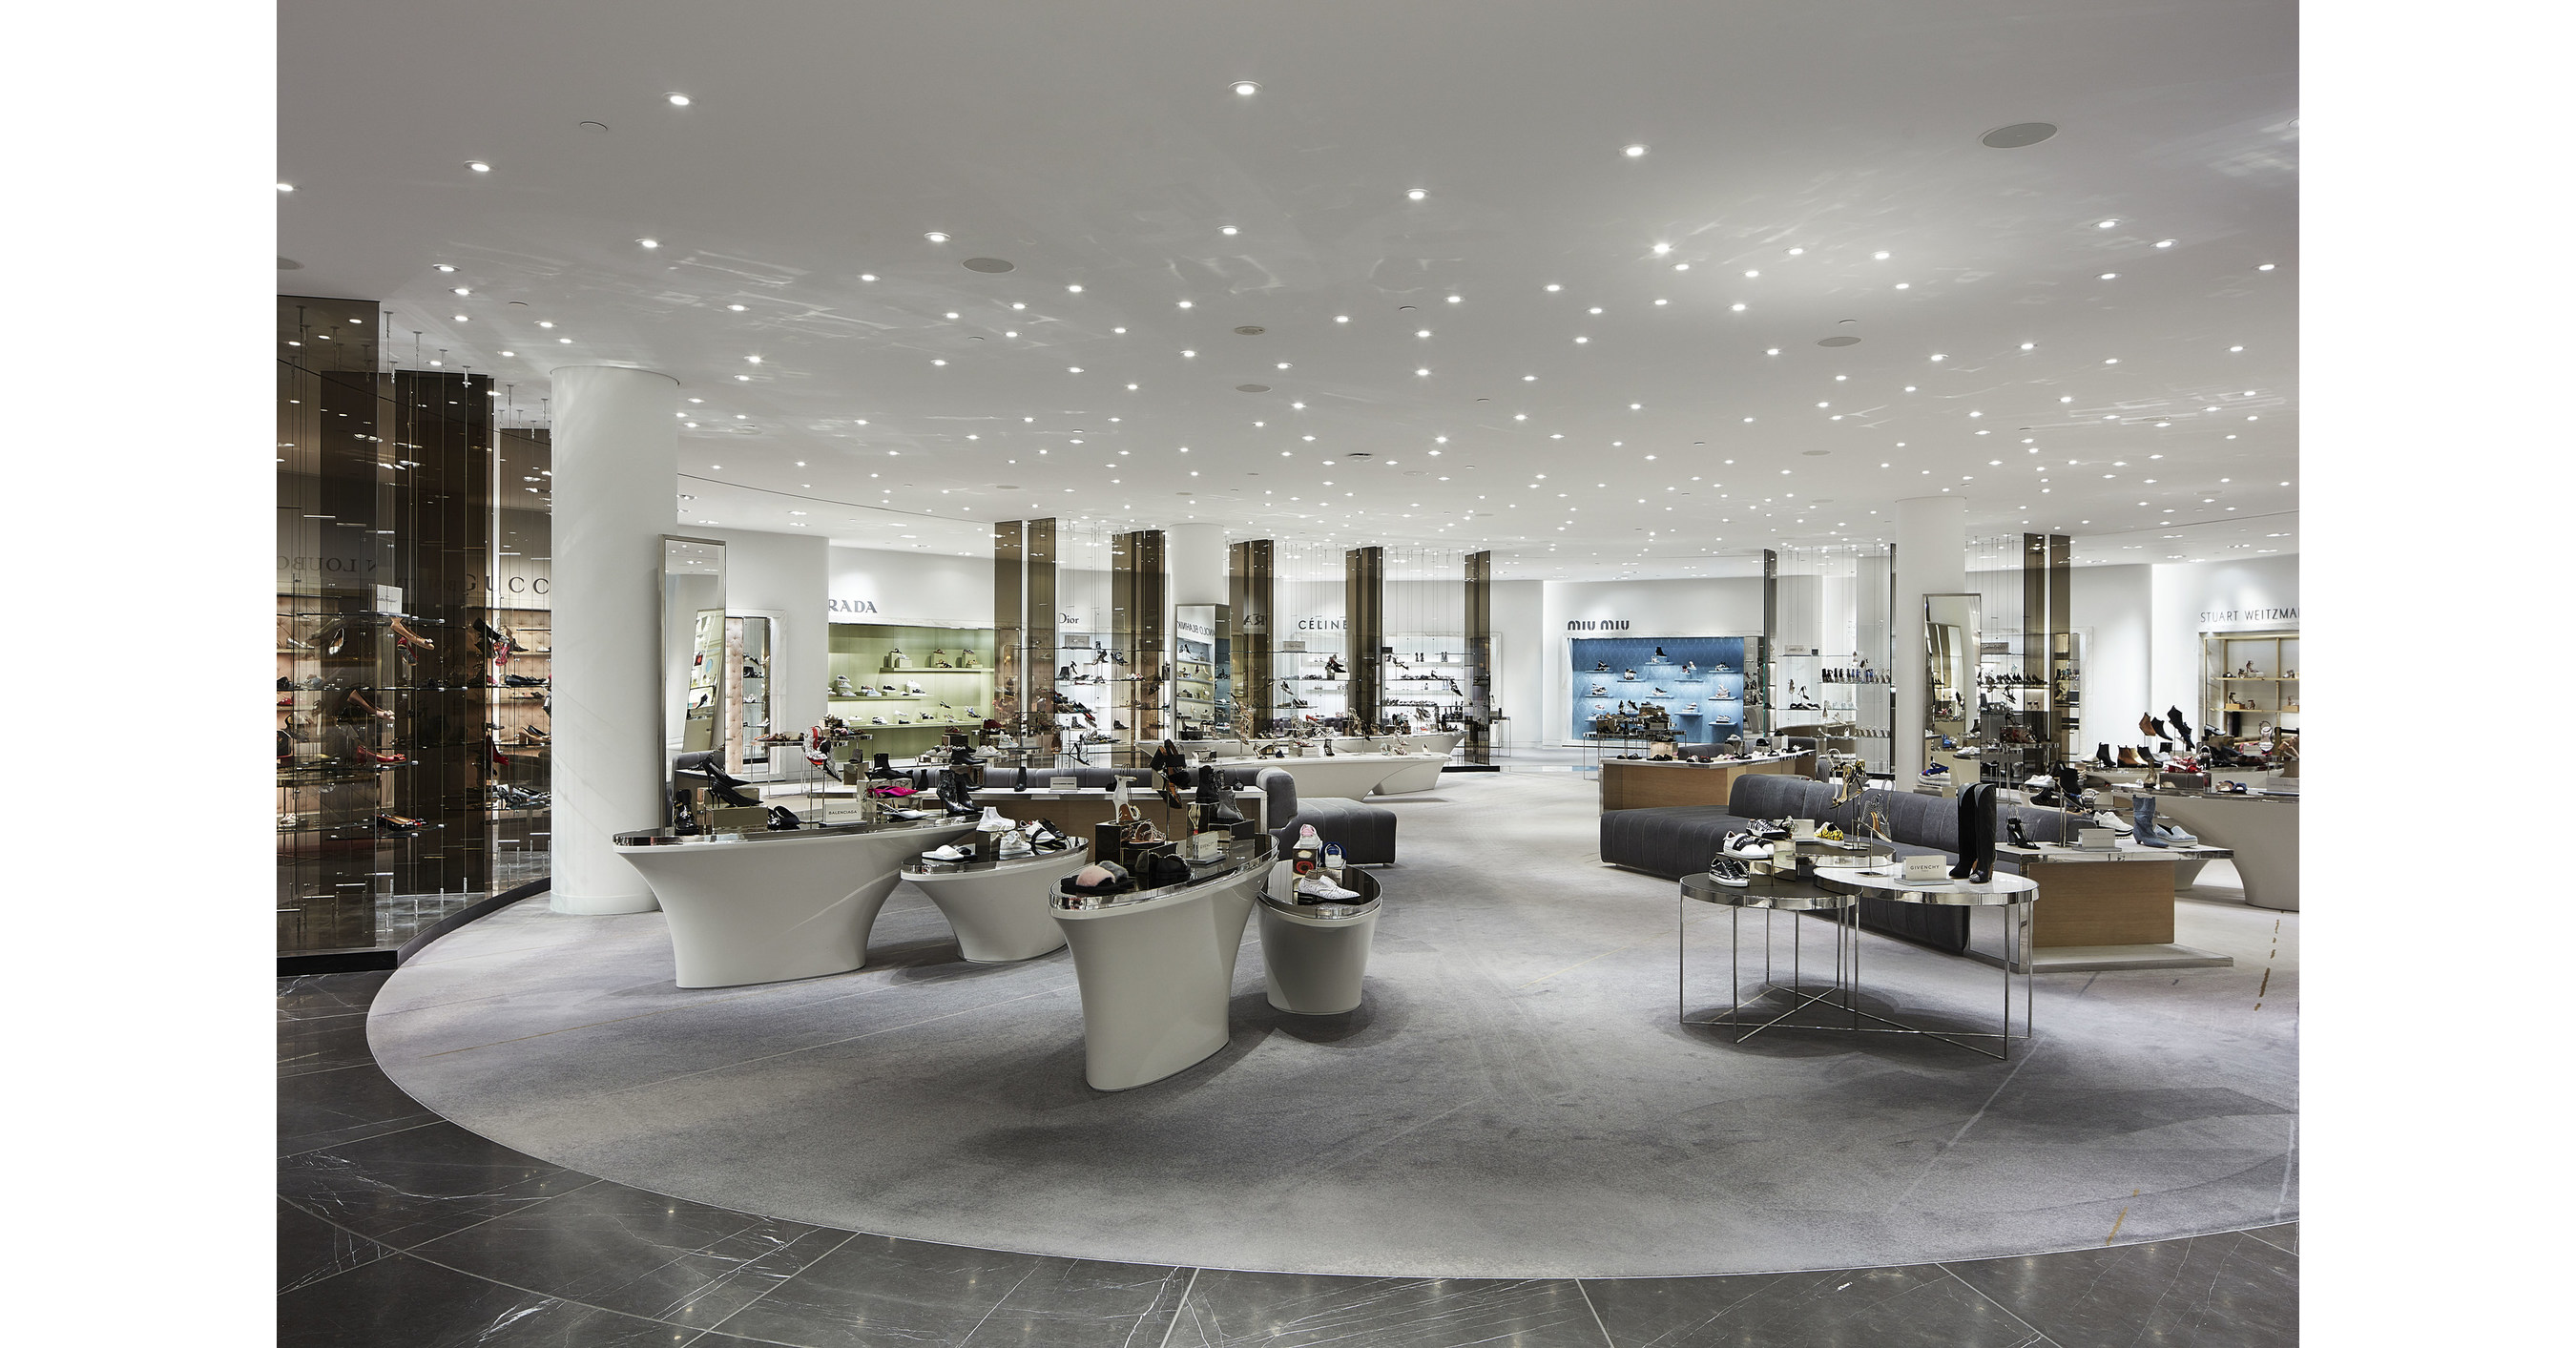 Louis Vuitton Toronto Holt Renfrew Bloor St - Leather Goods Store in Toronto